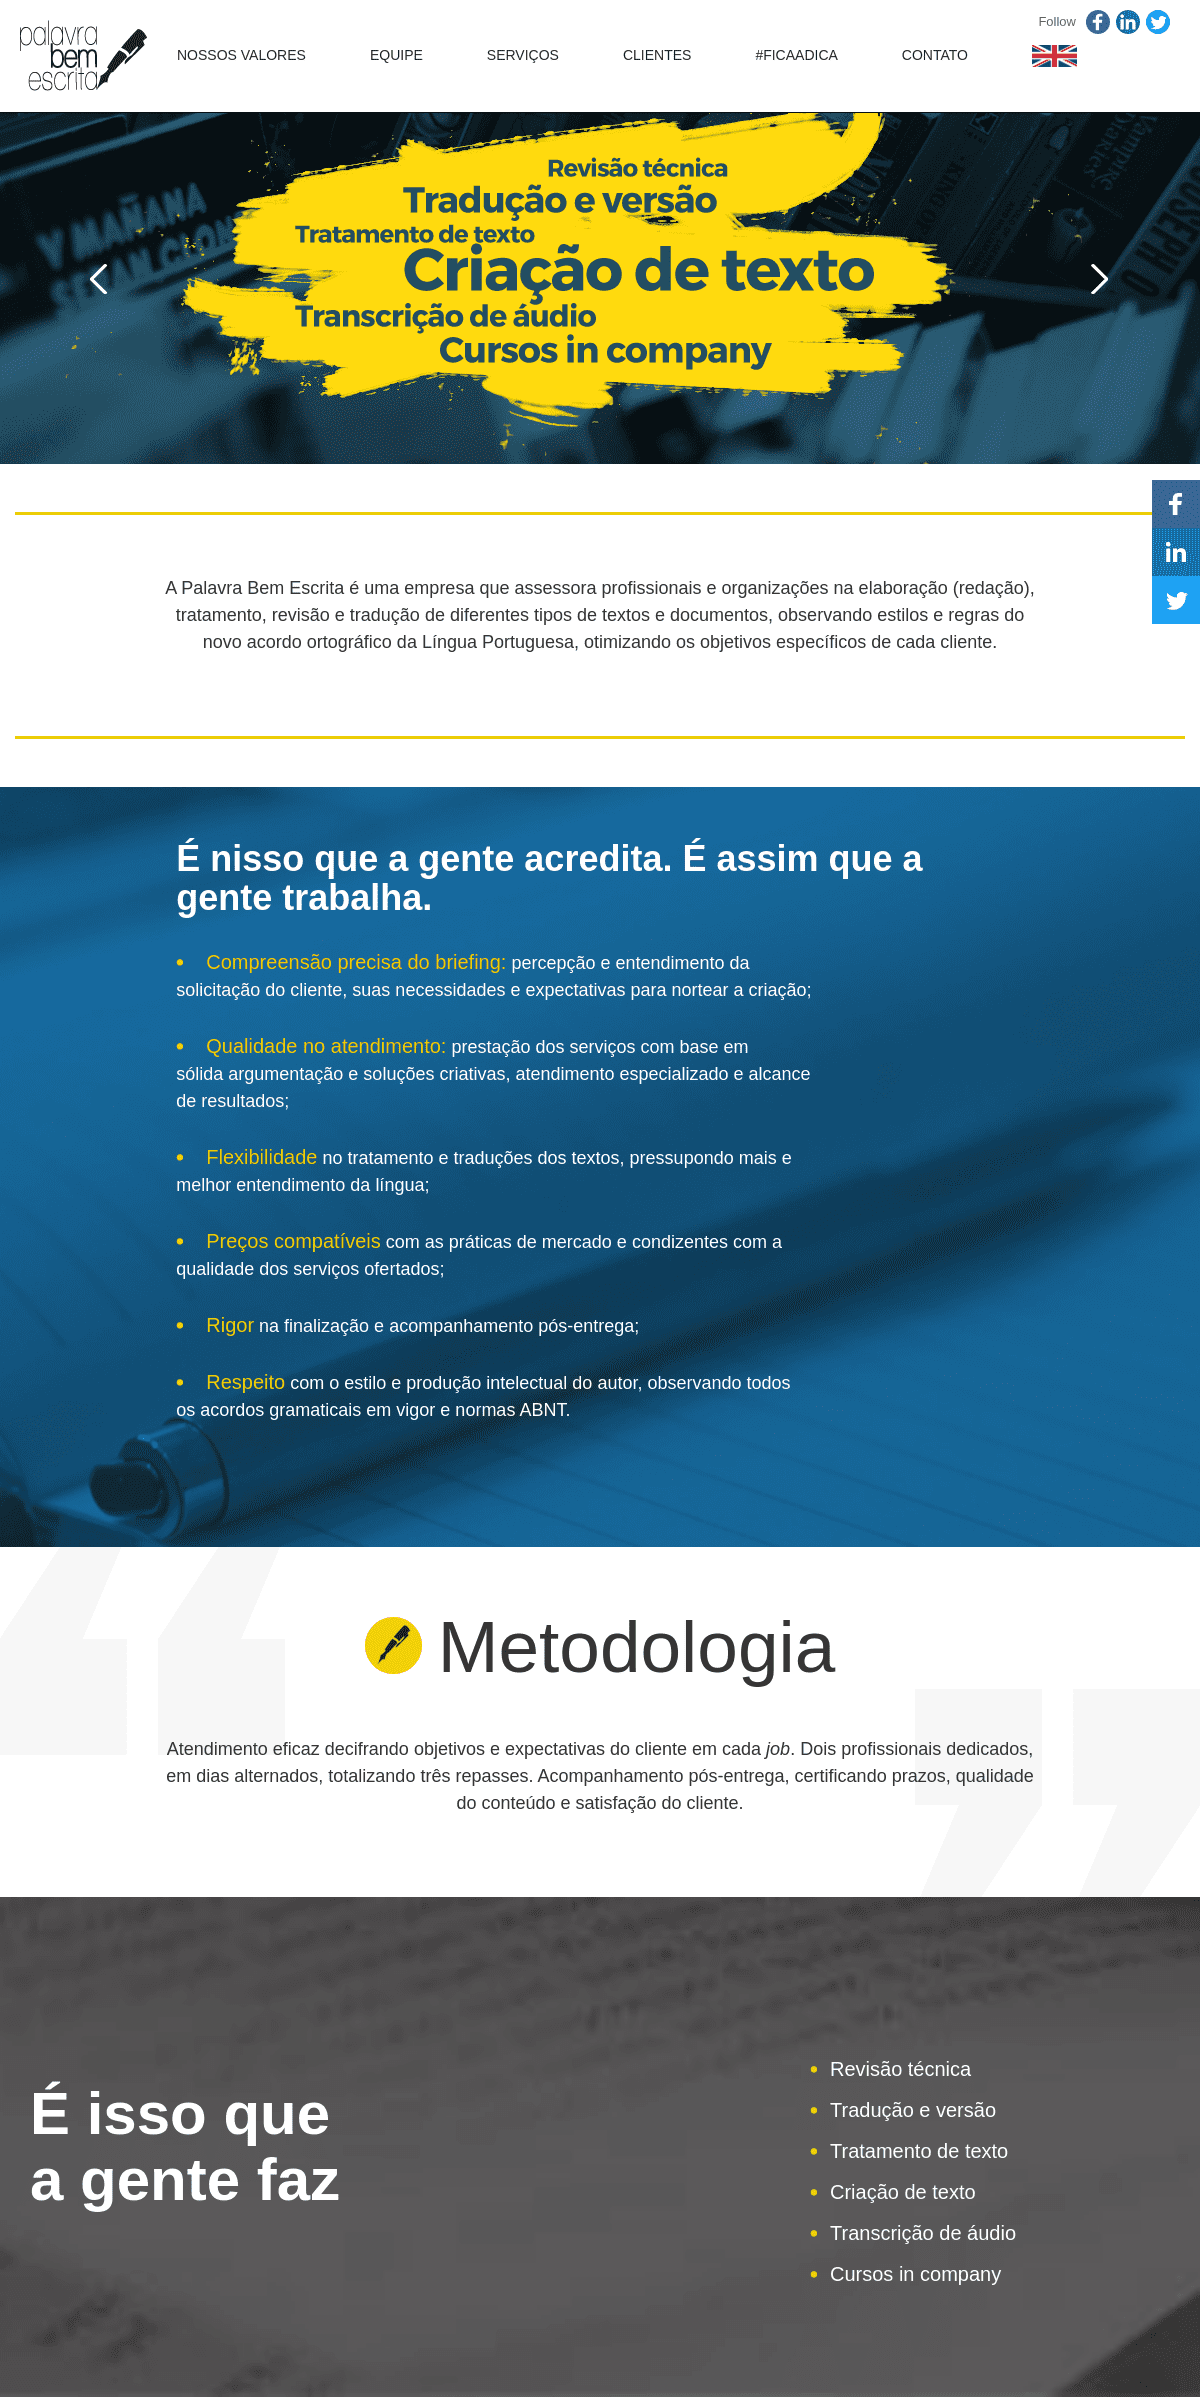 A complete backup of palavrabemescrita.com.br